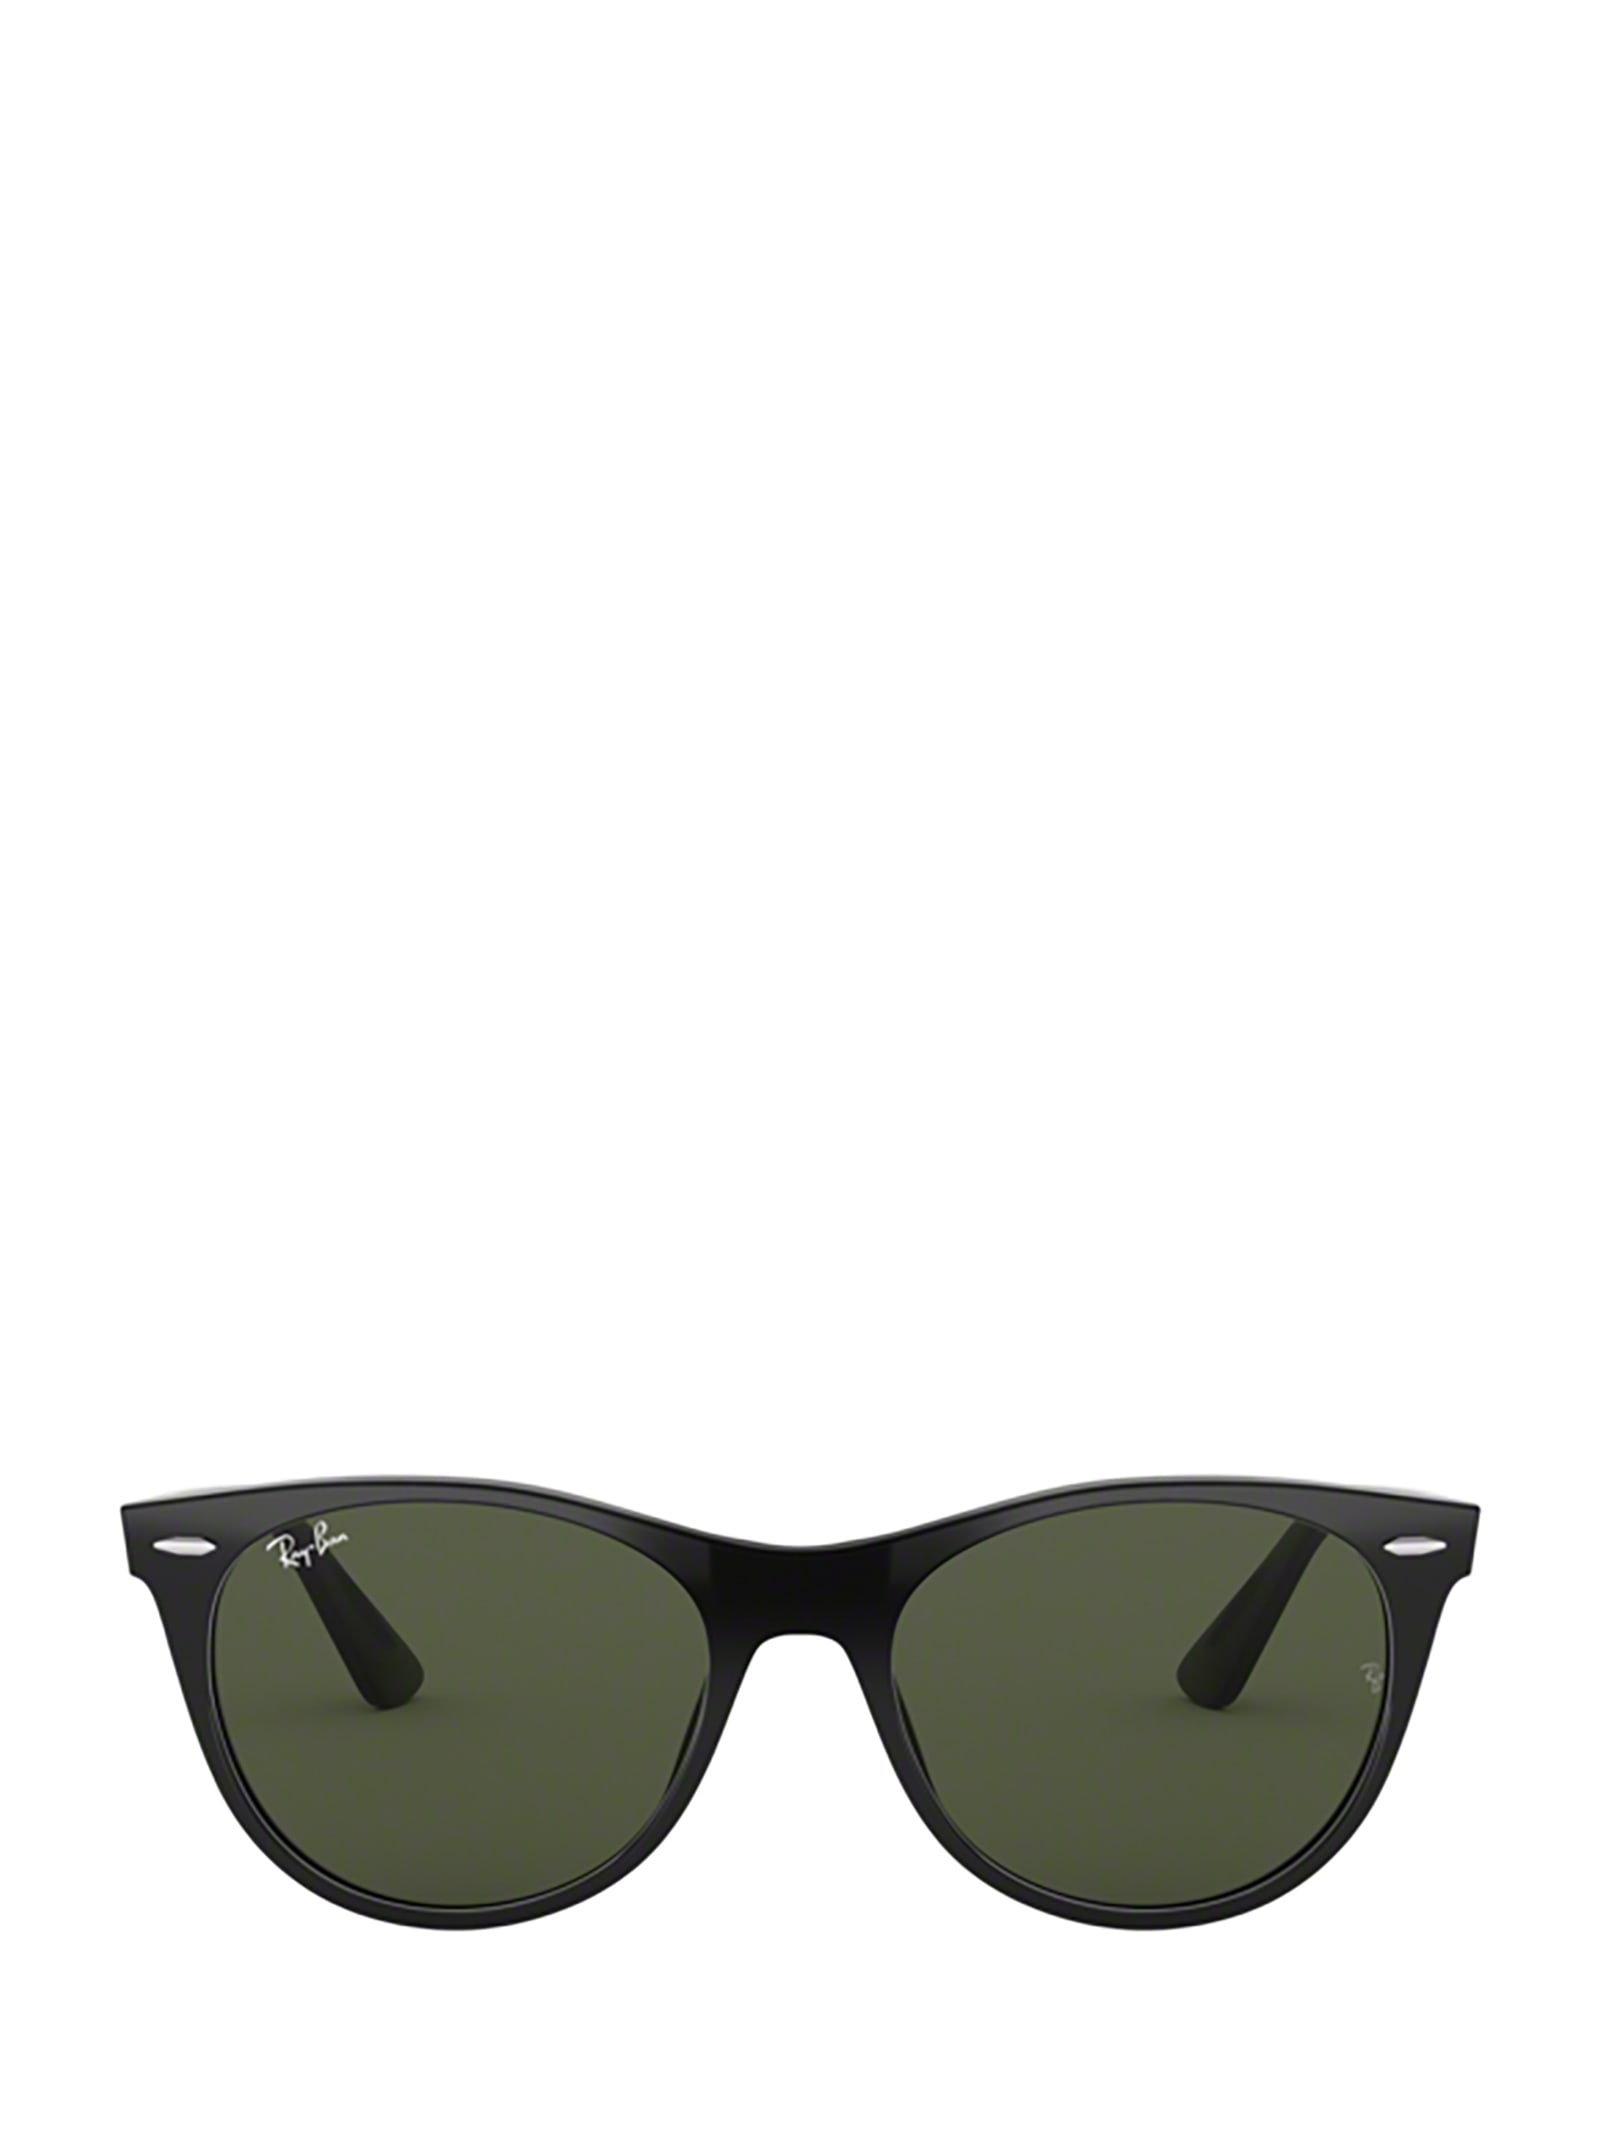 Ray-Ban Ray-ban Rb2185 Black Sunglasses